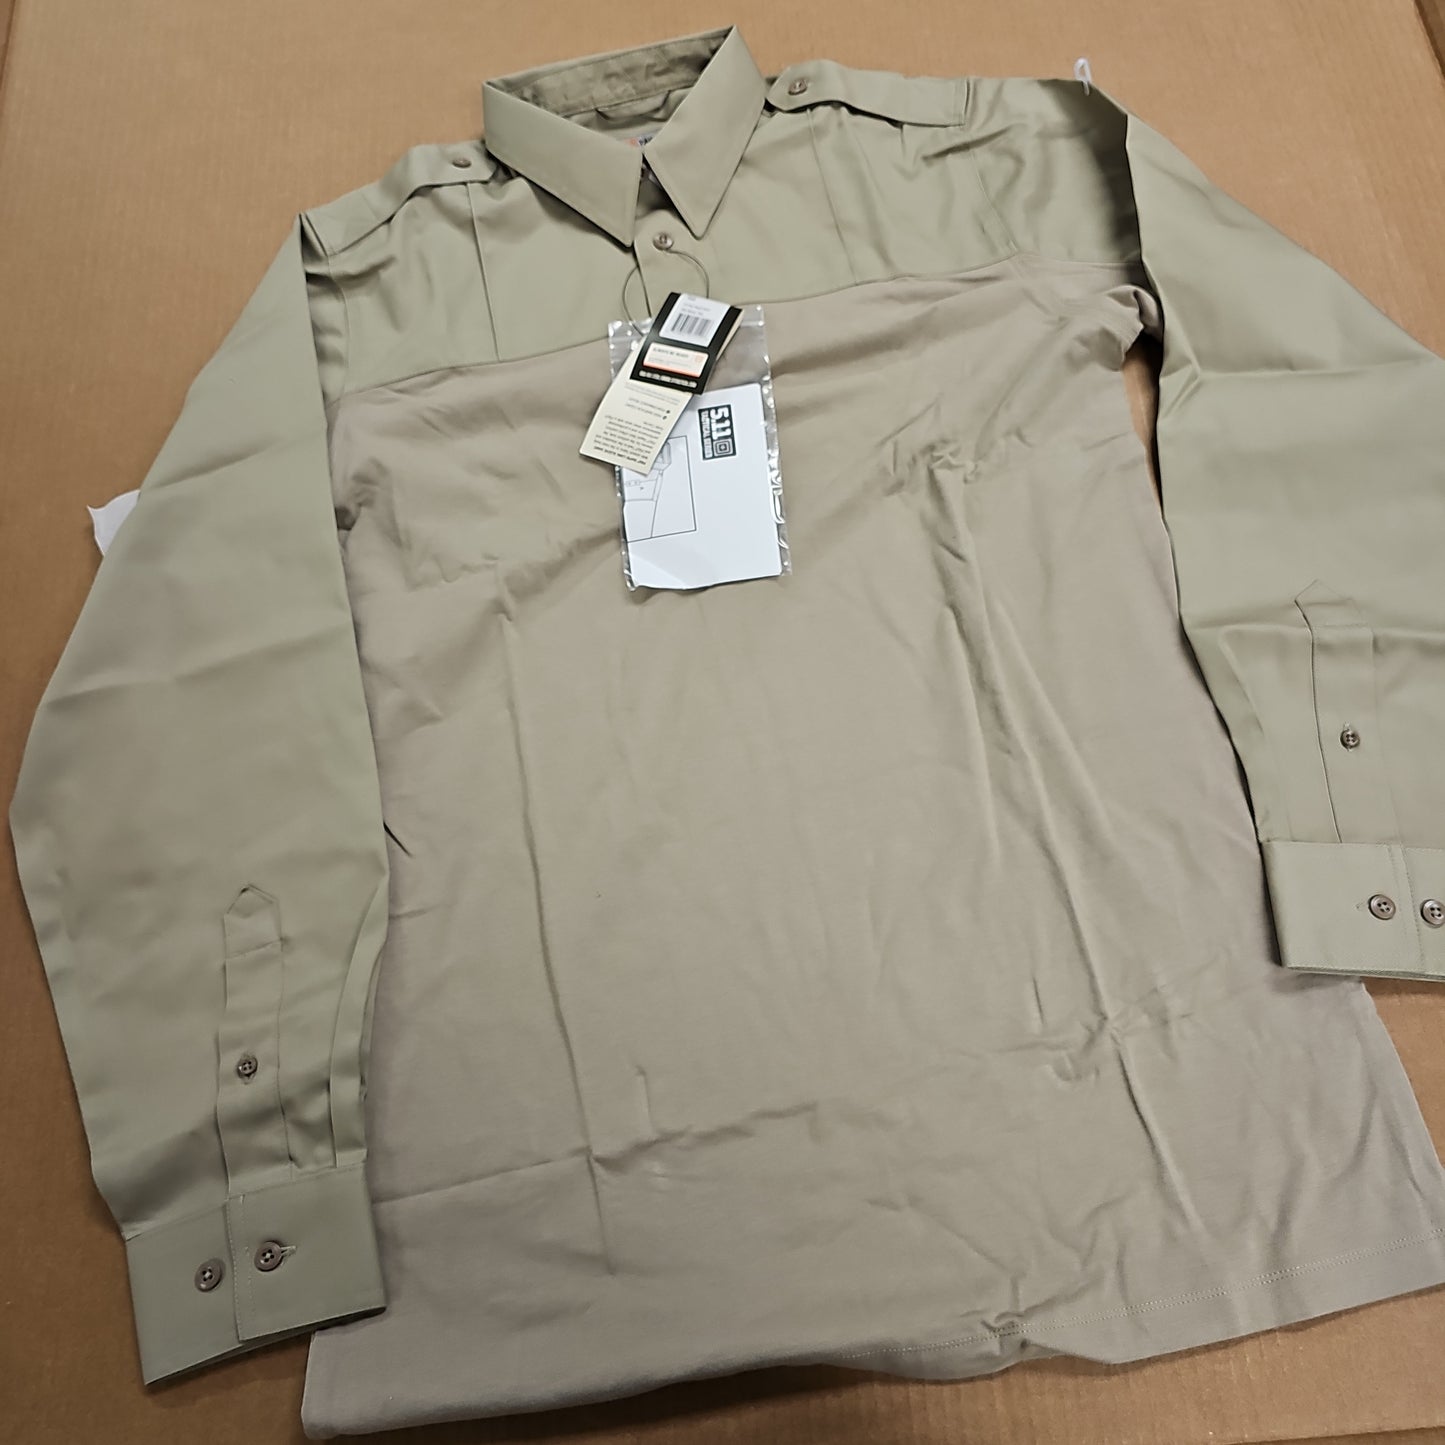 Shirt: PDU Rapid Shirt, L/S, Poly/Ctn, Silvertan, Large/Long 72197-160-L-L